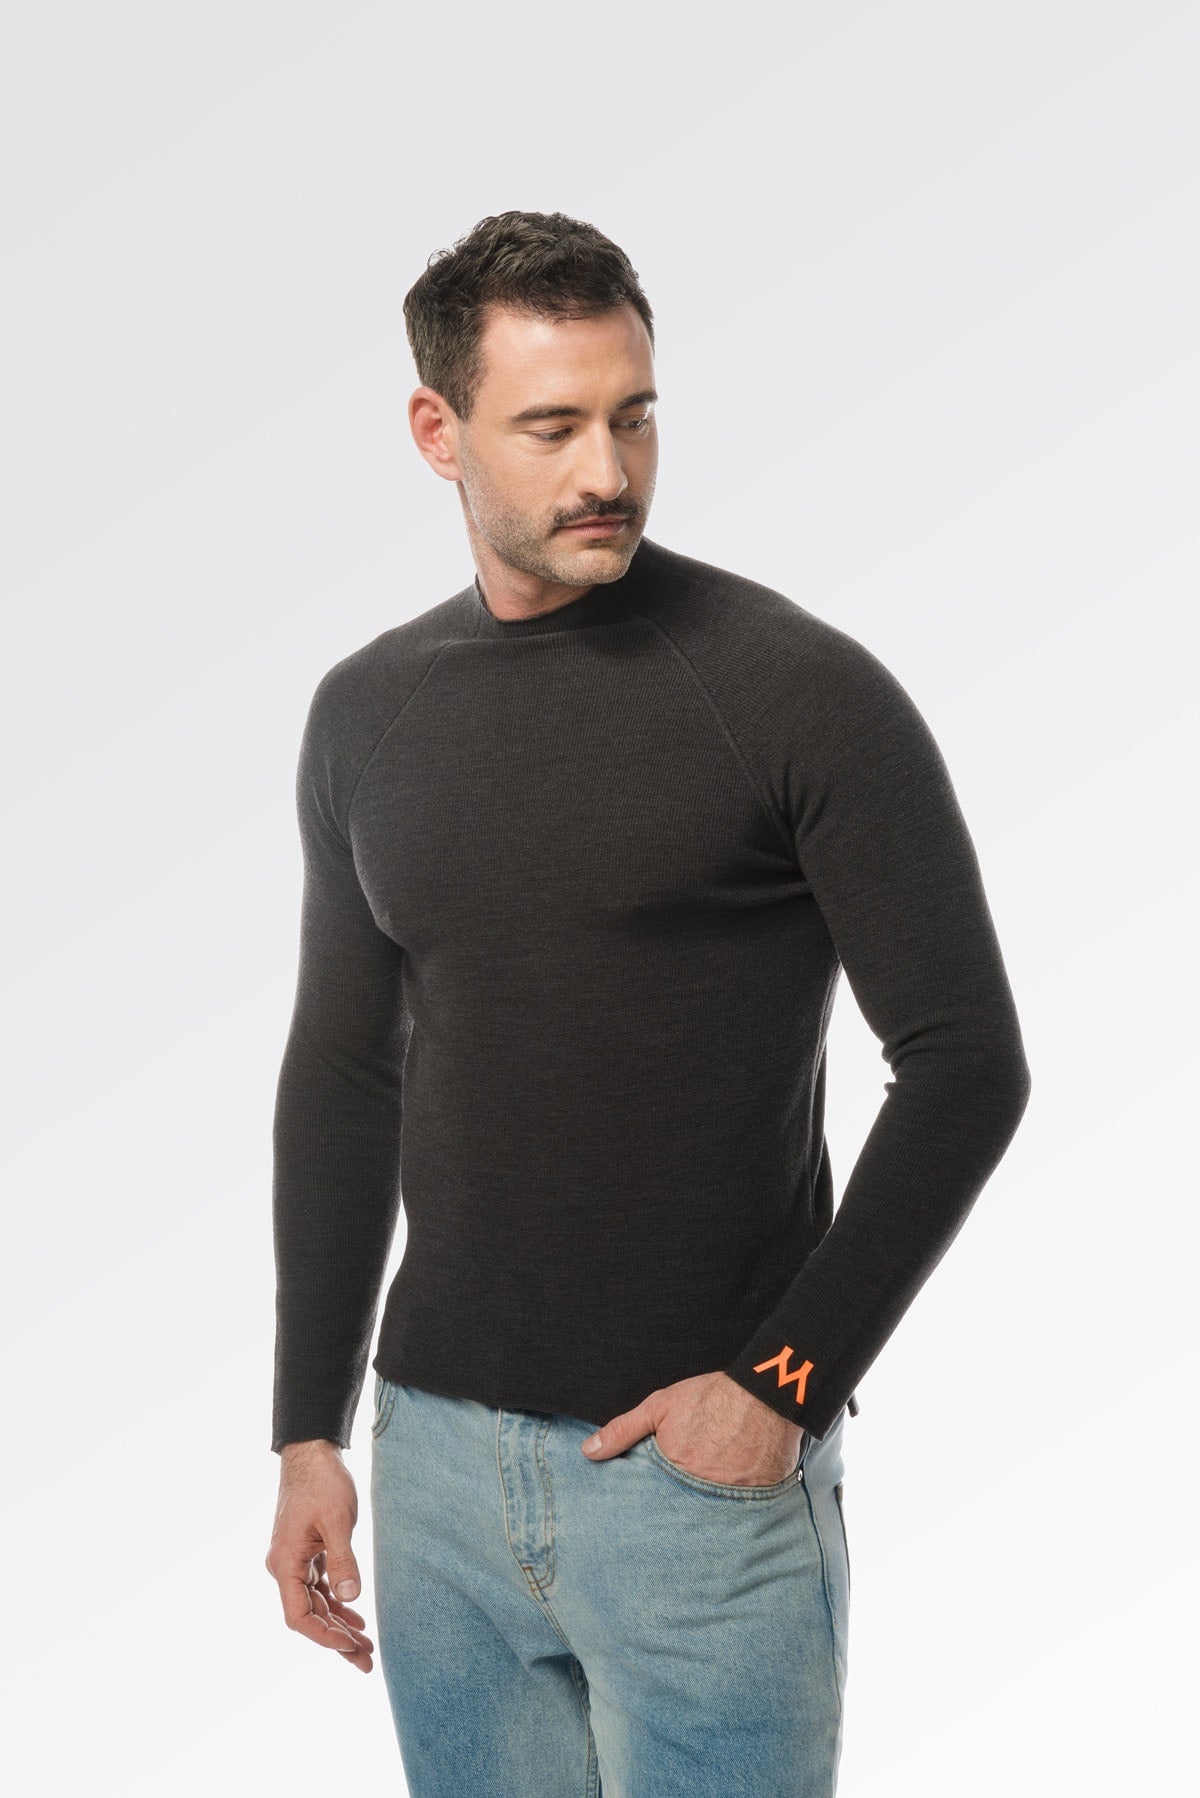 Pulloverpullover – Herren, Herbst/Winter – 100 % Wolle – 100 % Made in Italy | Brunella Gori